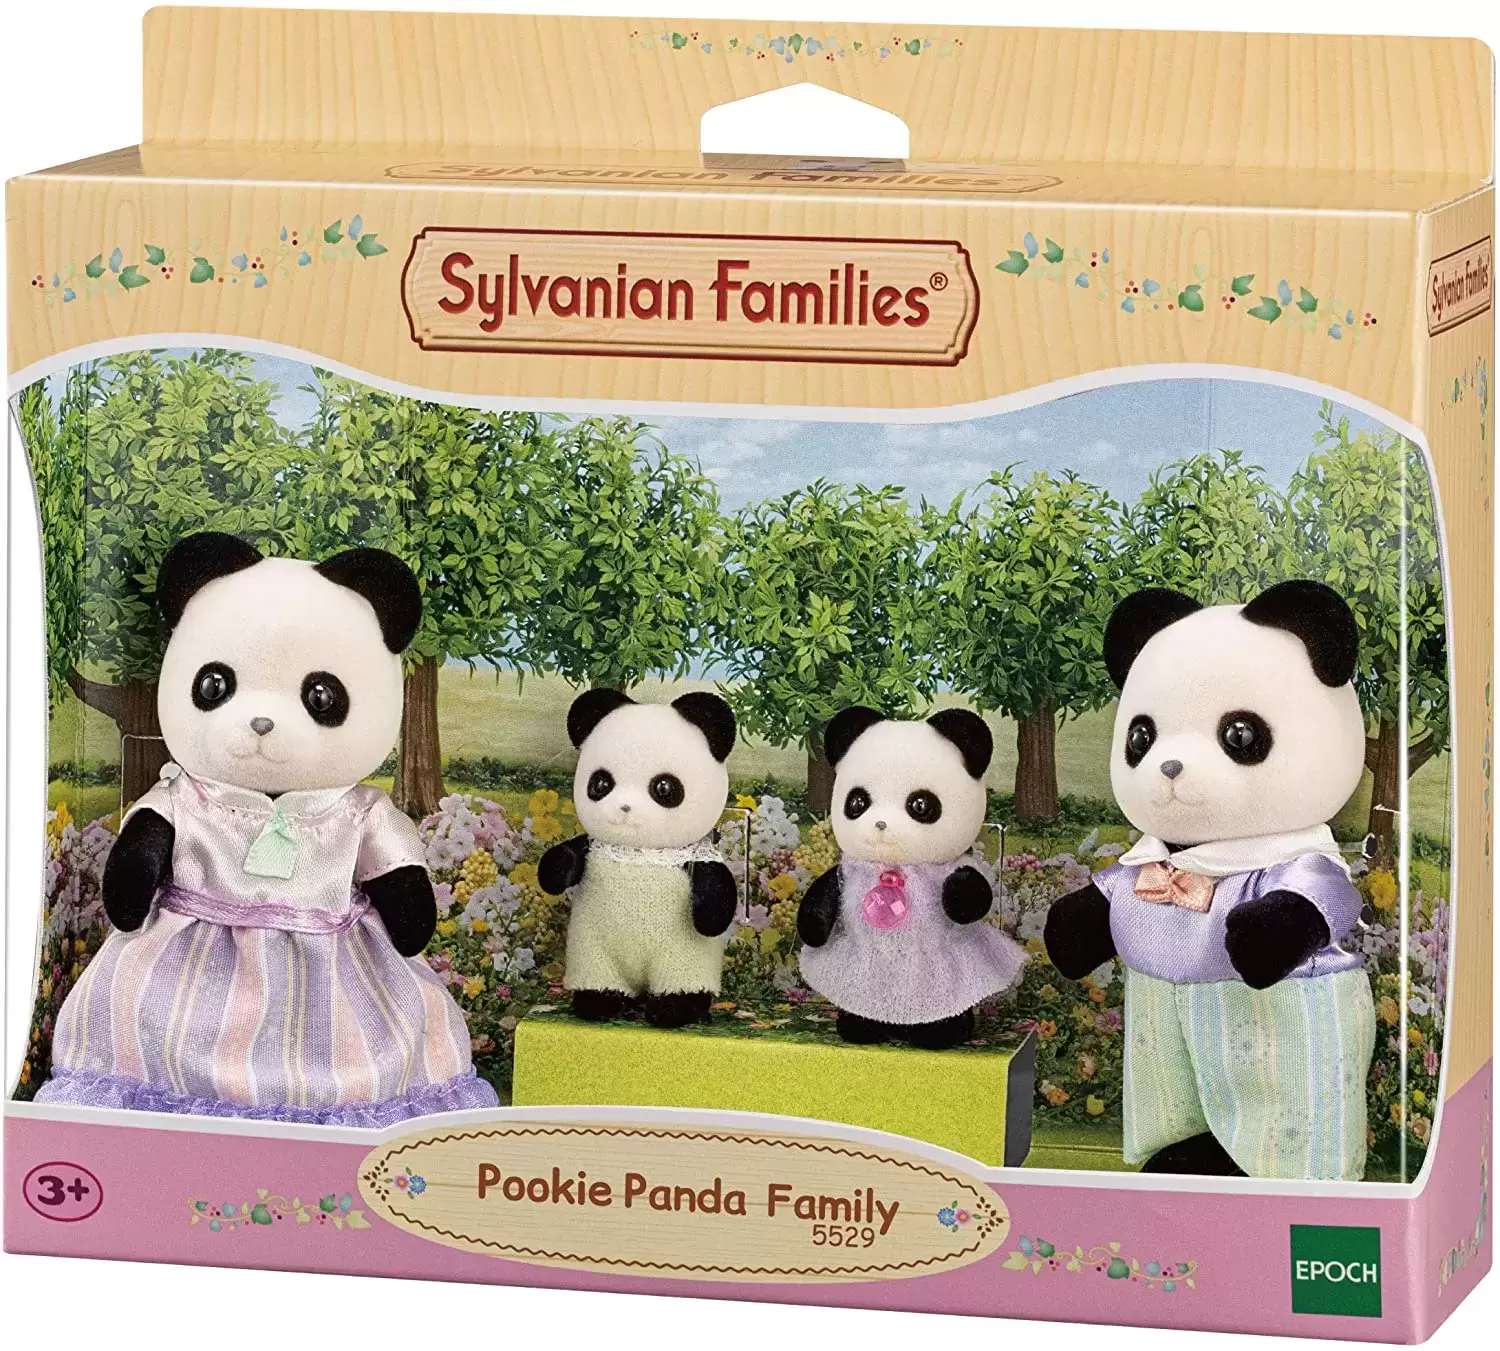 Sylvanian Families (Europe) - Pookie Panda Family